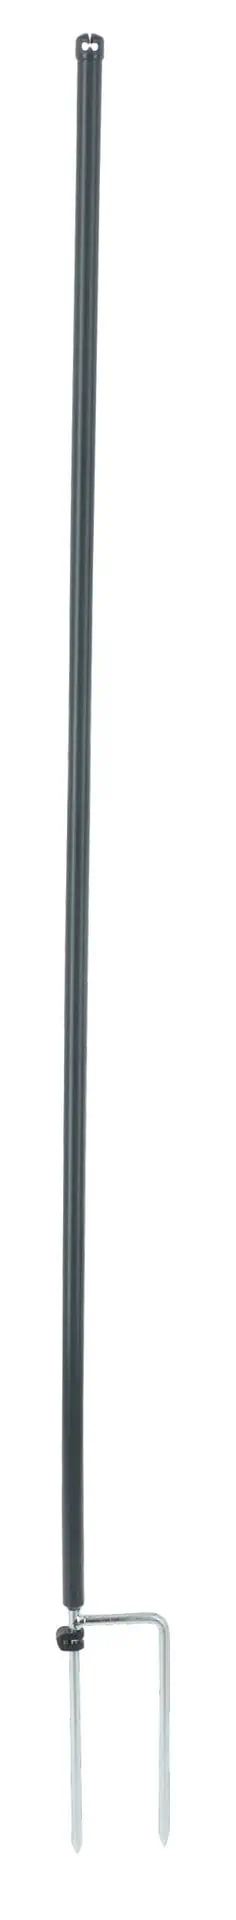 Ersättningsstolpe grå PA 122cm dubbelspets